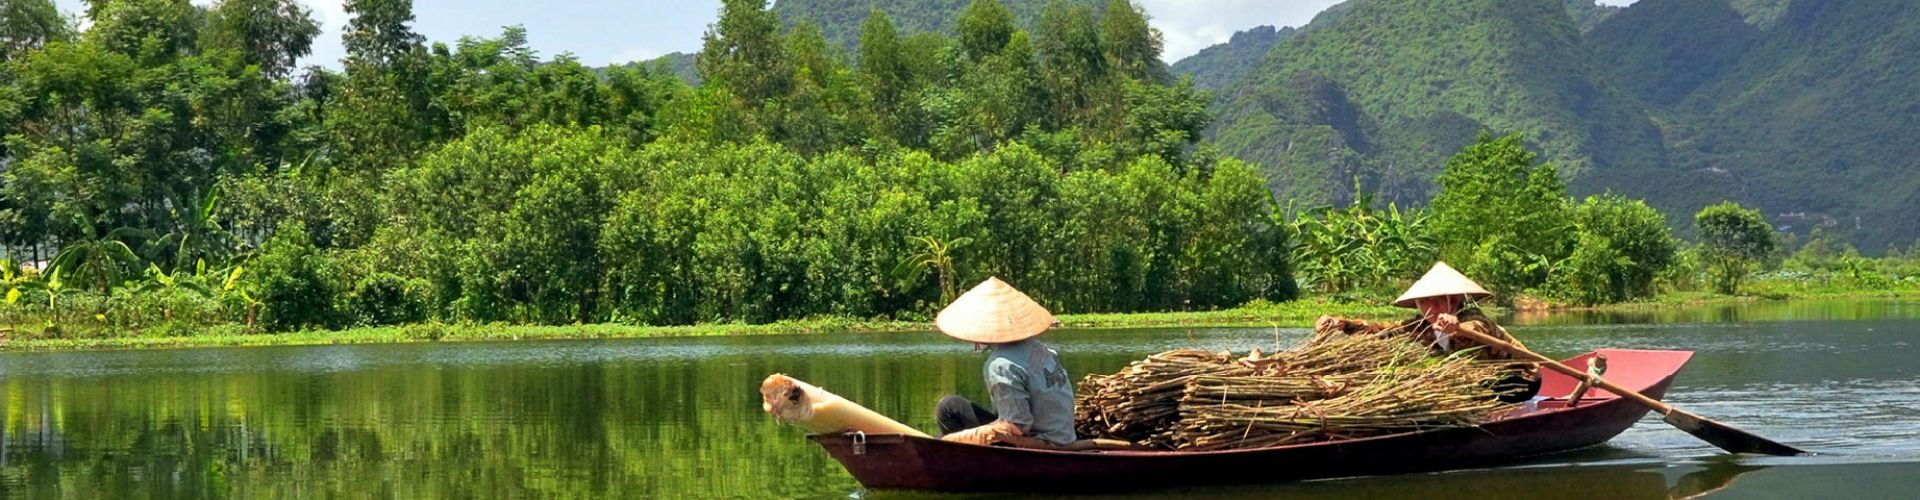 Travel Experiences in Vietnam